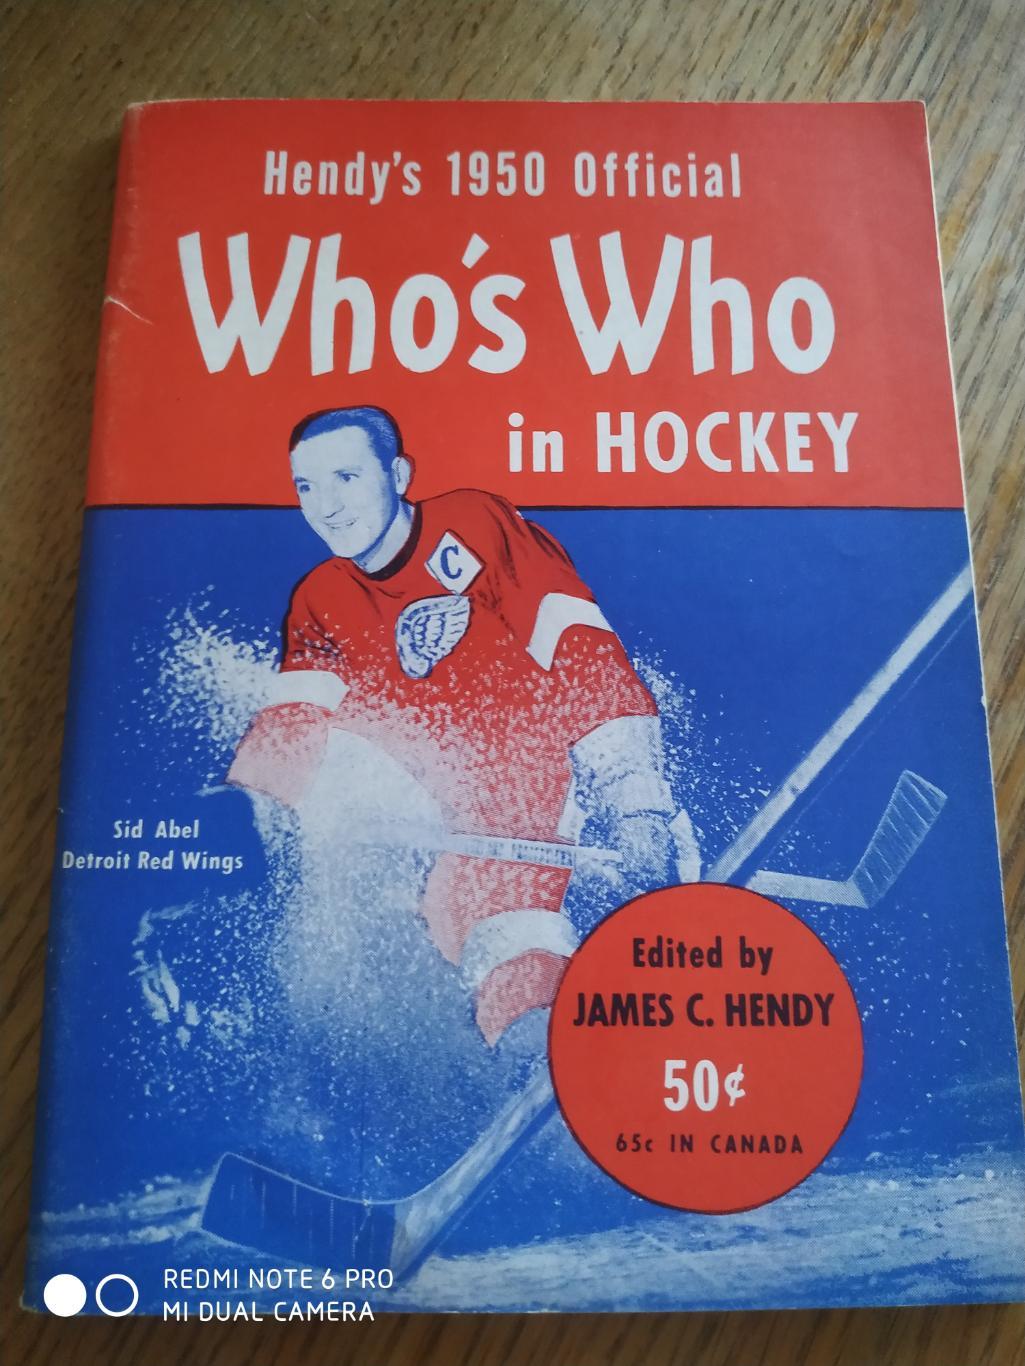 ХОККЕЙ СПРАВОЧНИК НХЛ NHL 1950 HENDYS OFFICIAL WHOS WHO IN HOCKEY